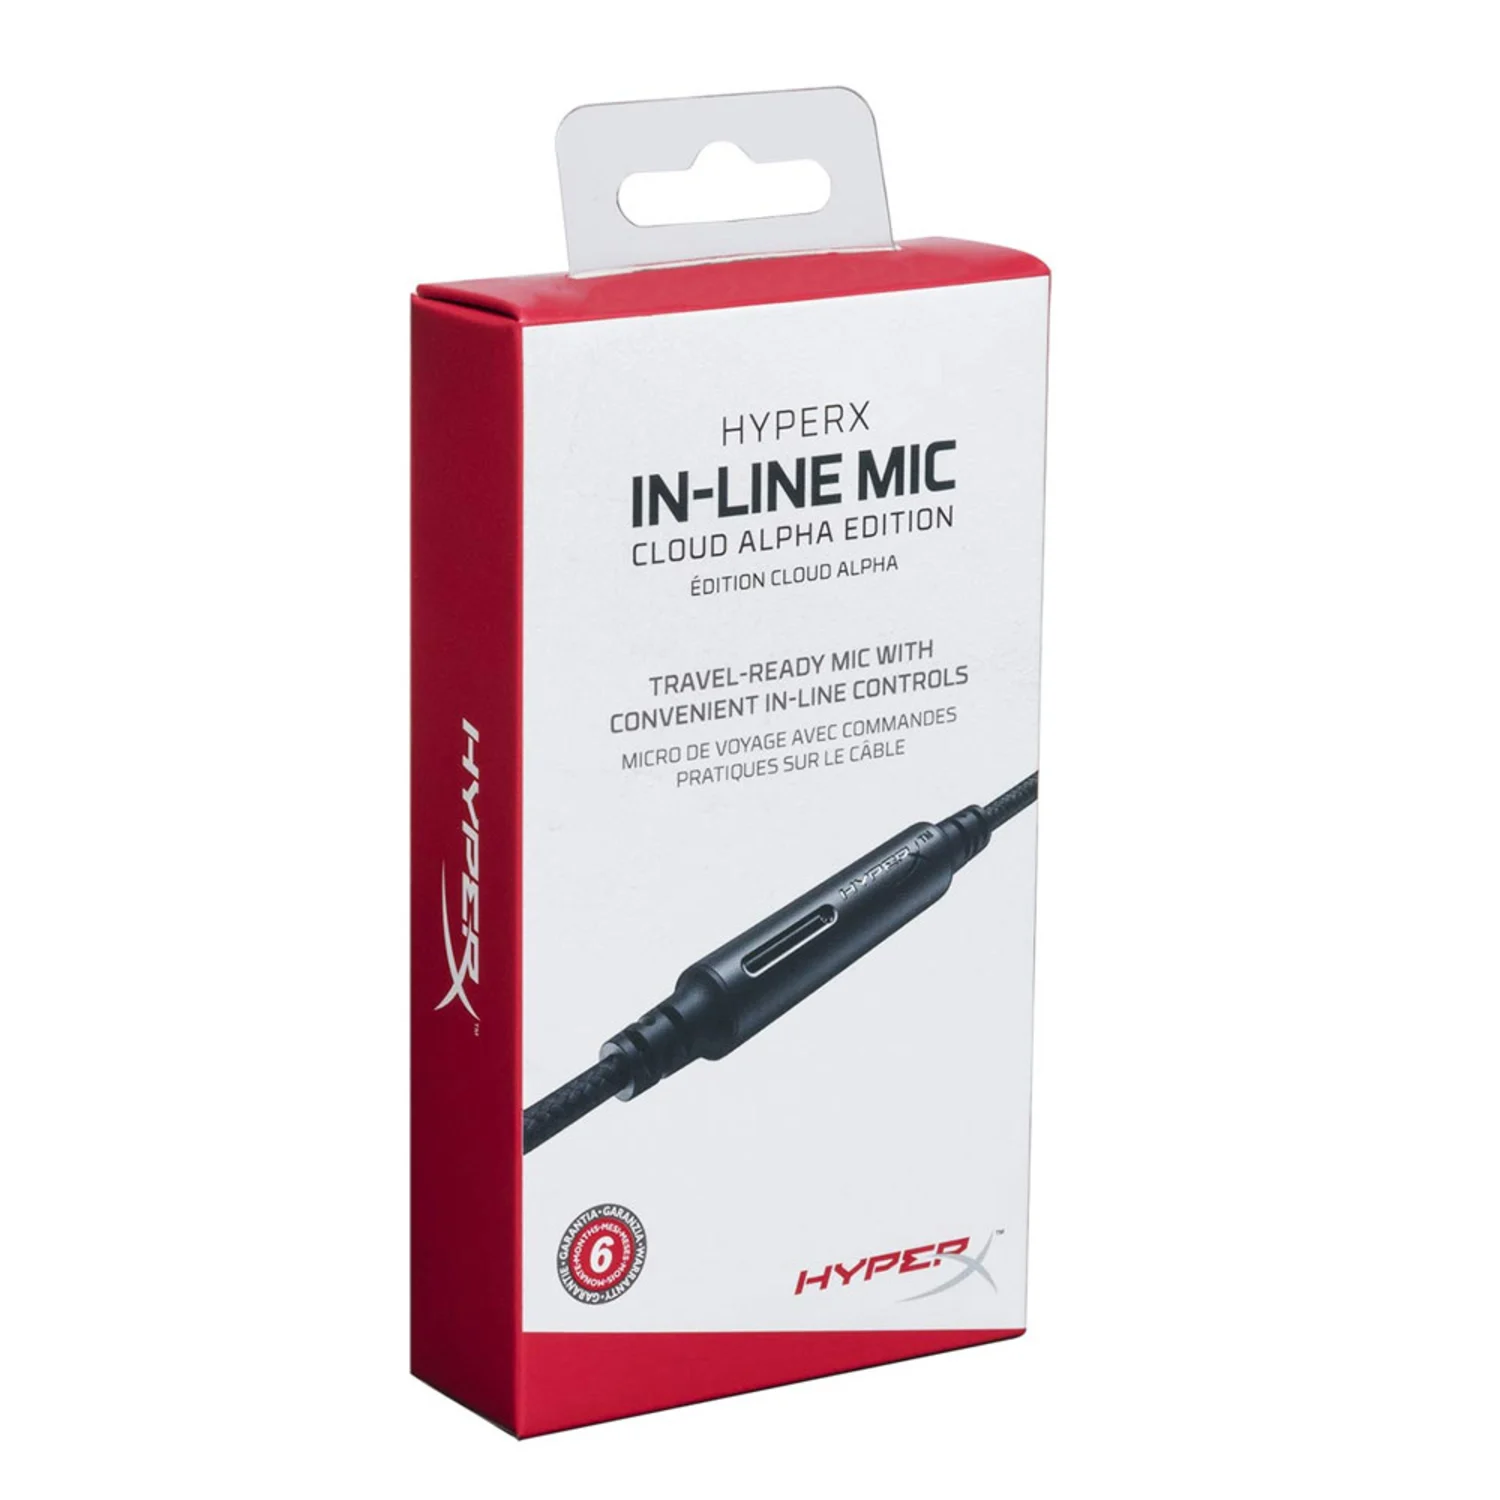 Microfone HyperX In-Line Mic Cloud Alpha Edition - Preto (HX-ILMICCA-BK)